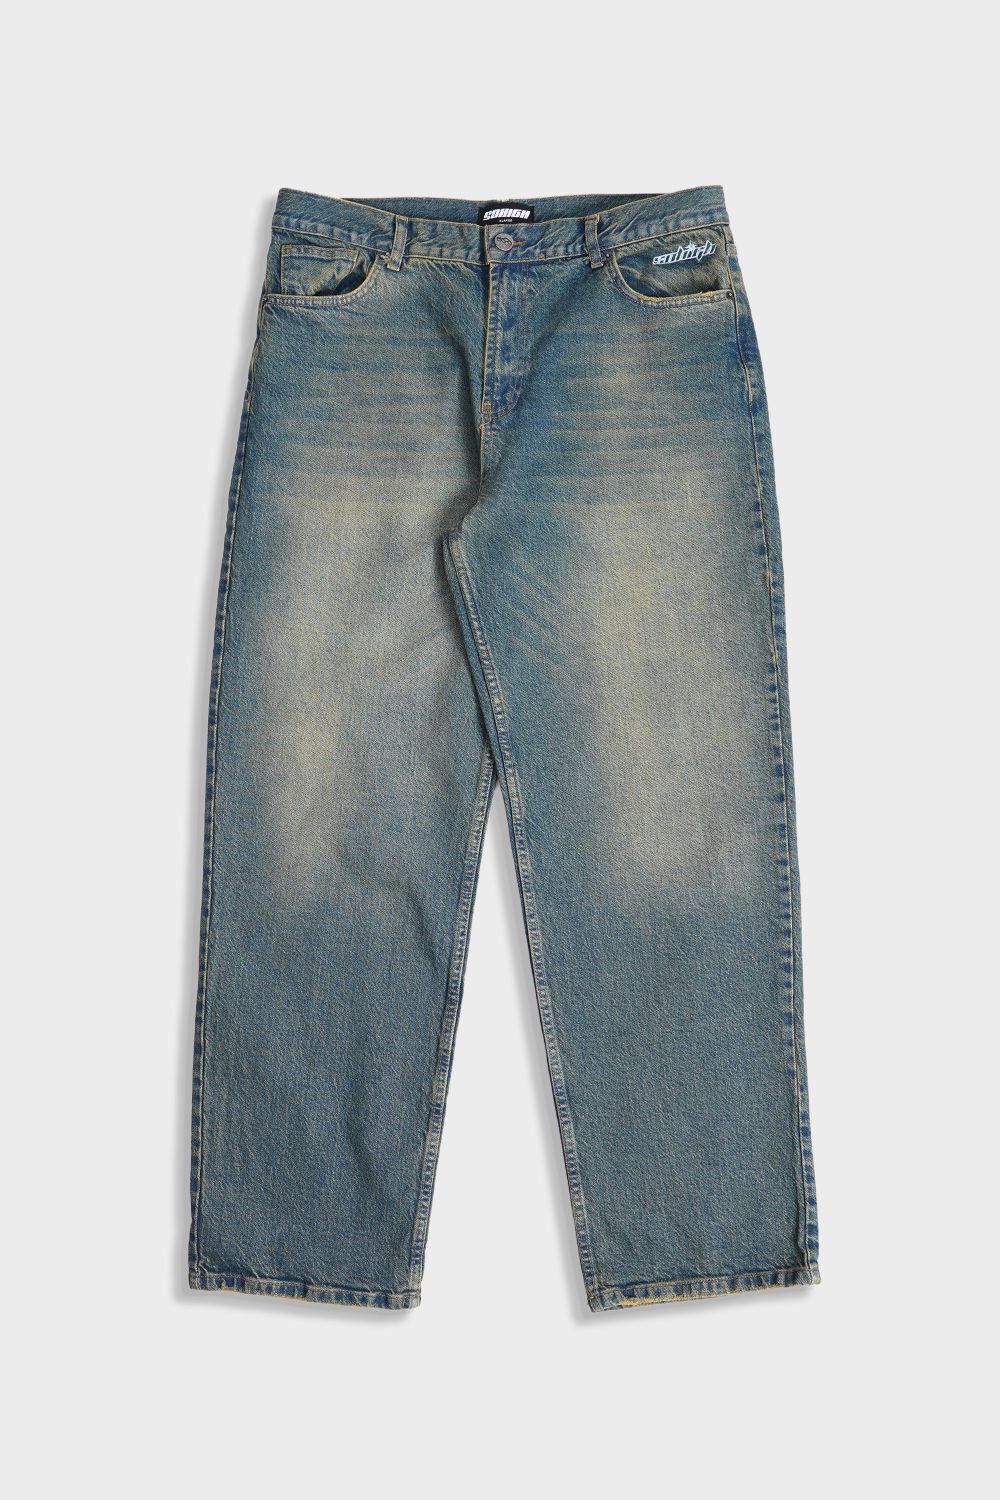 Sohigh Tint Wash Baggy Skate Jean (SHGH-J-4)